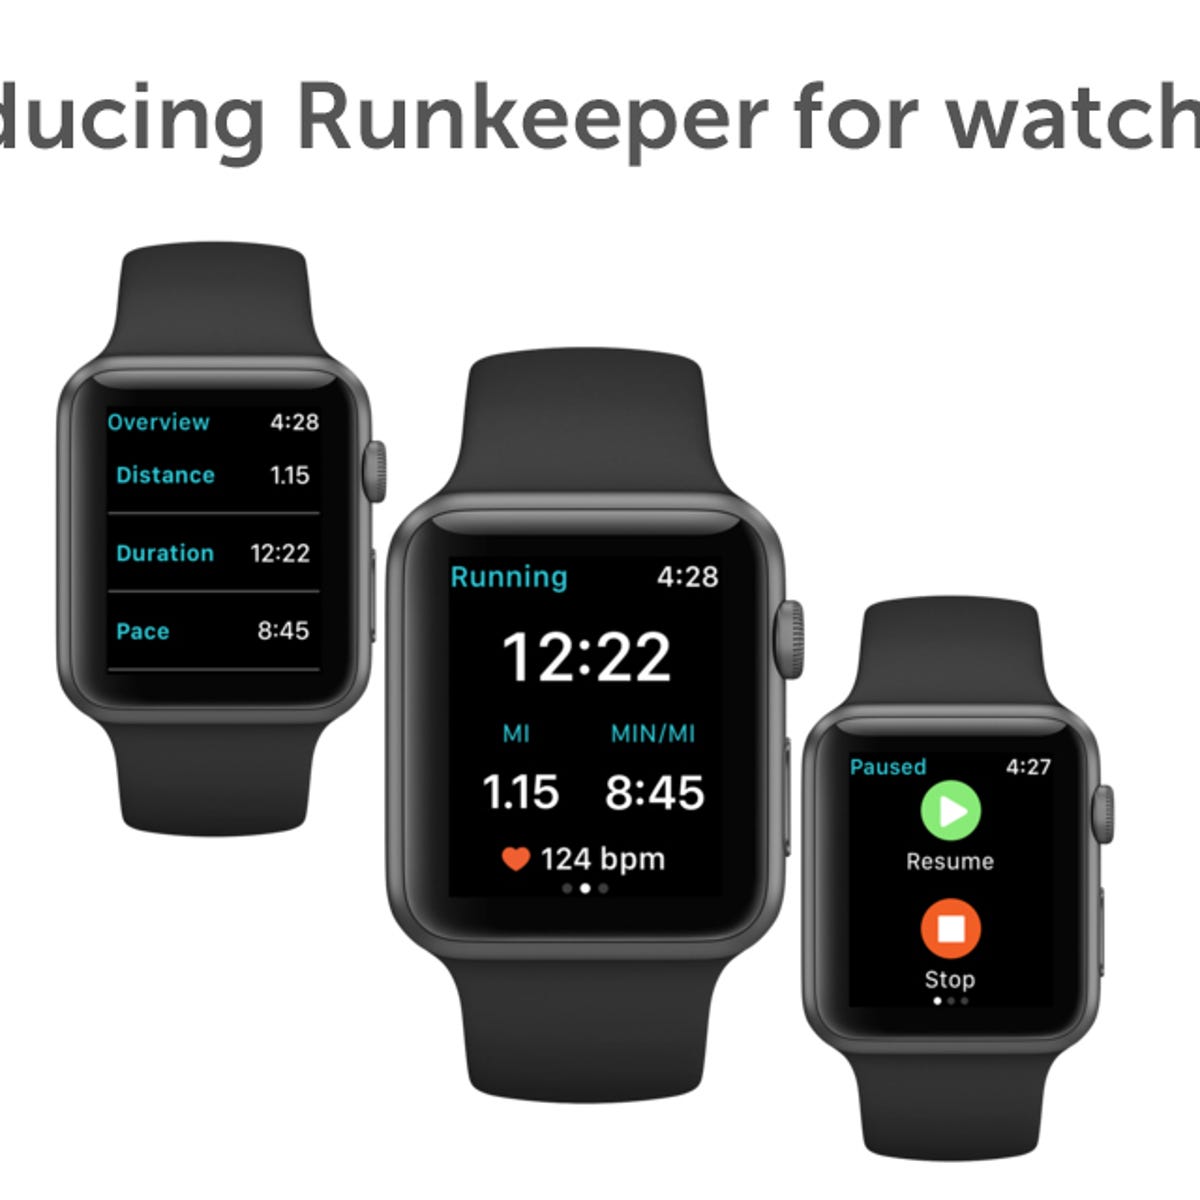 Runkeeper: The Apple Watch running app sent the Fenix 3 to a drawer | ZDNET